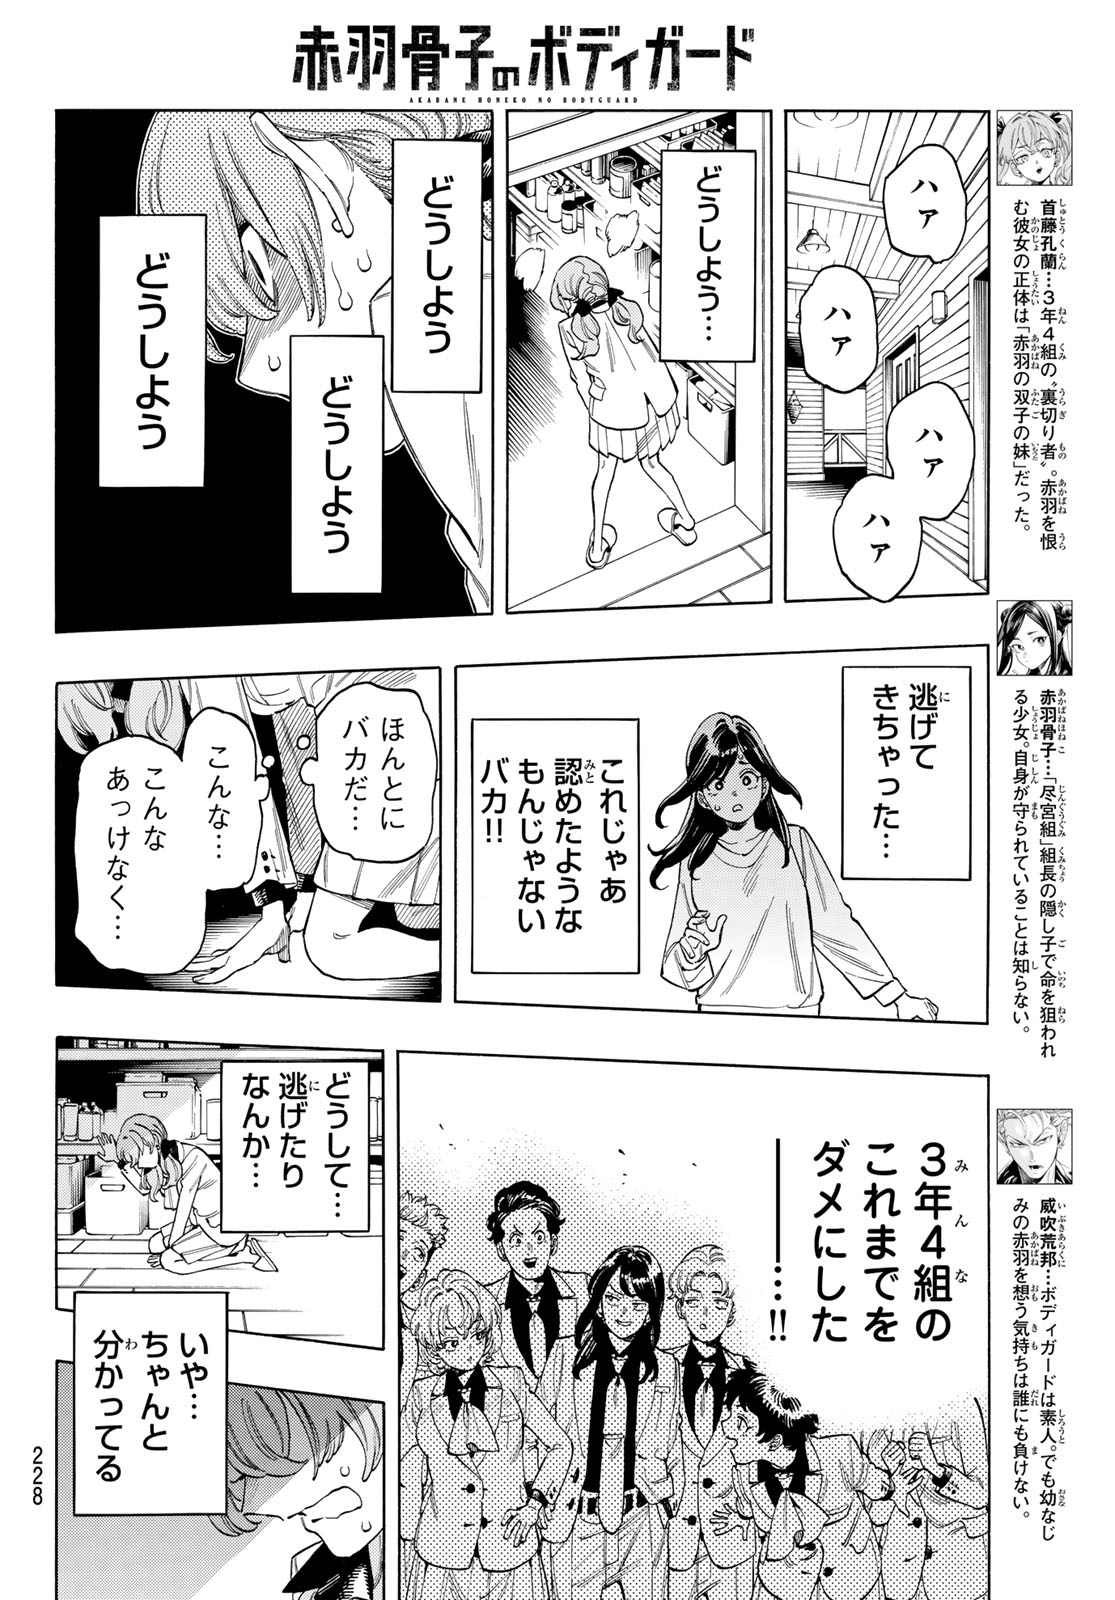 Akabane Honeko no Bodyguard - Chapter 88 - Page 4